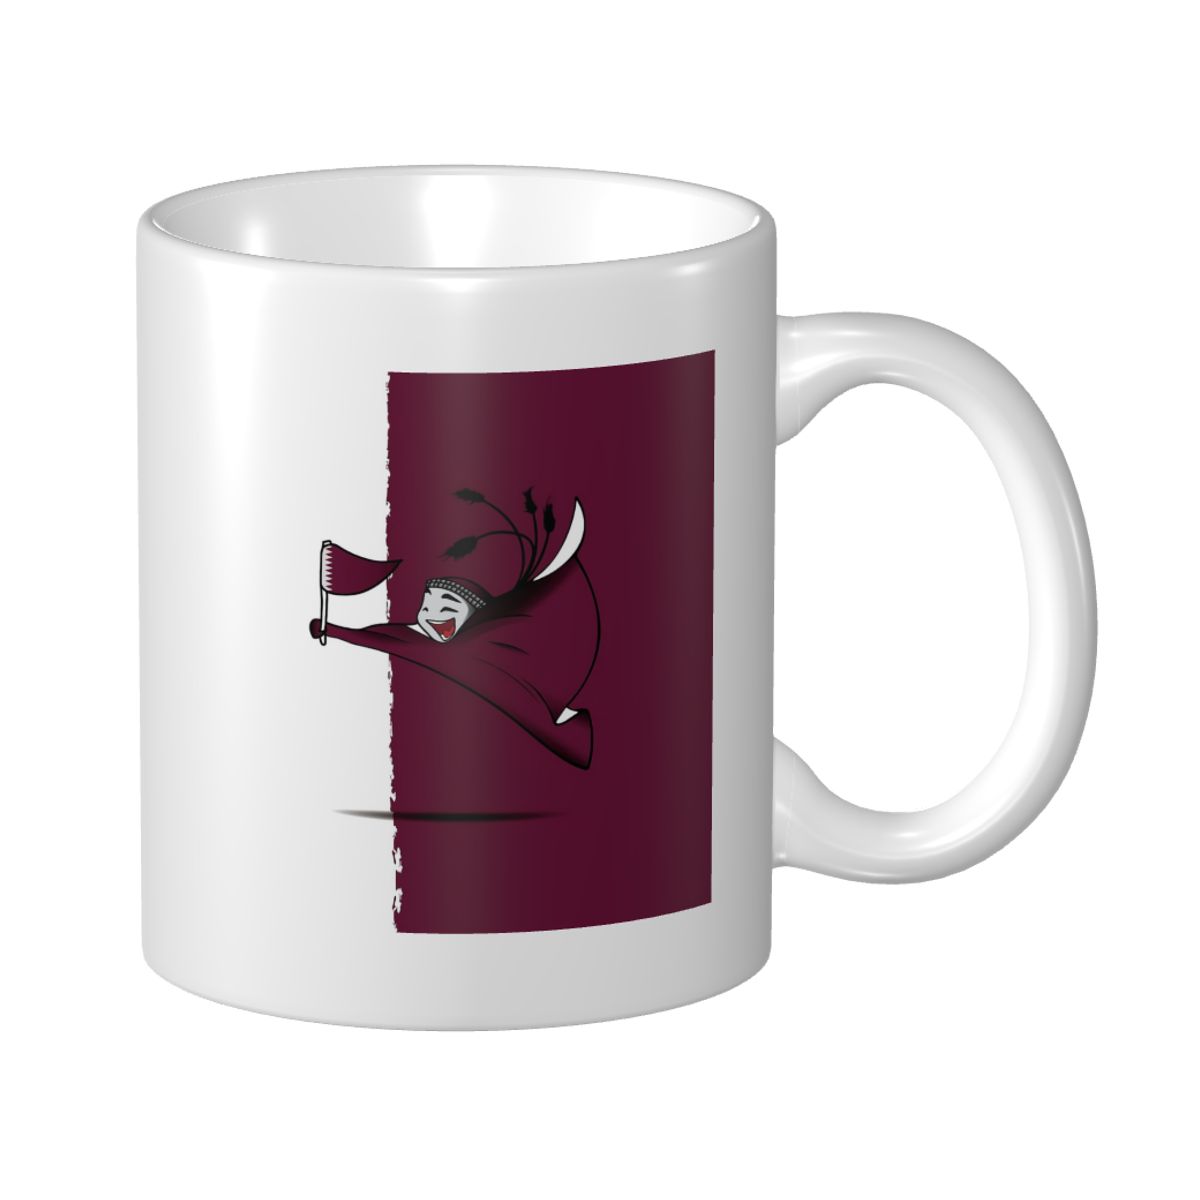 Qatar World Cup 2022 Mascot Mug